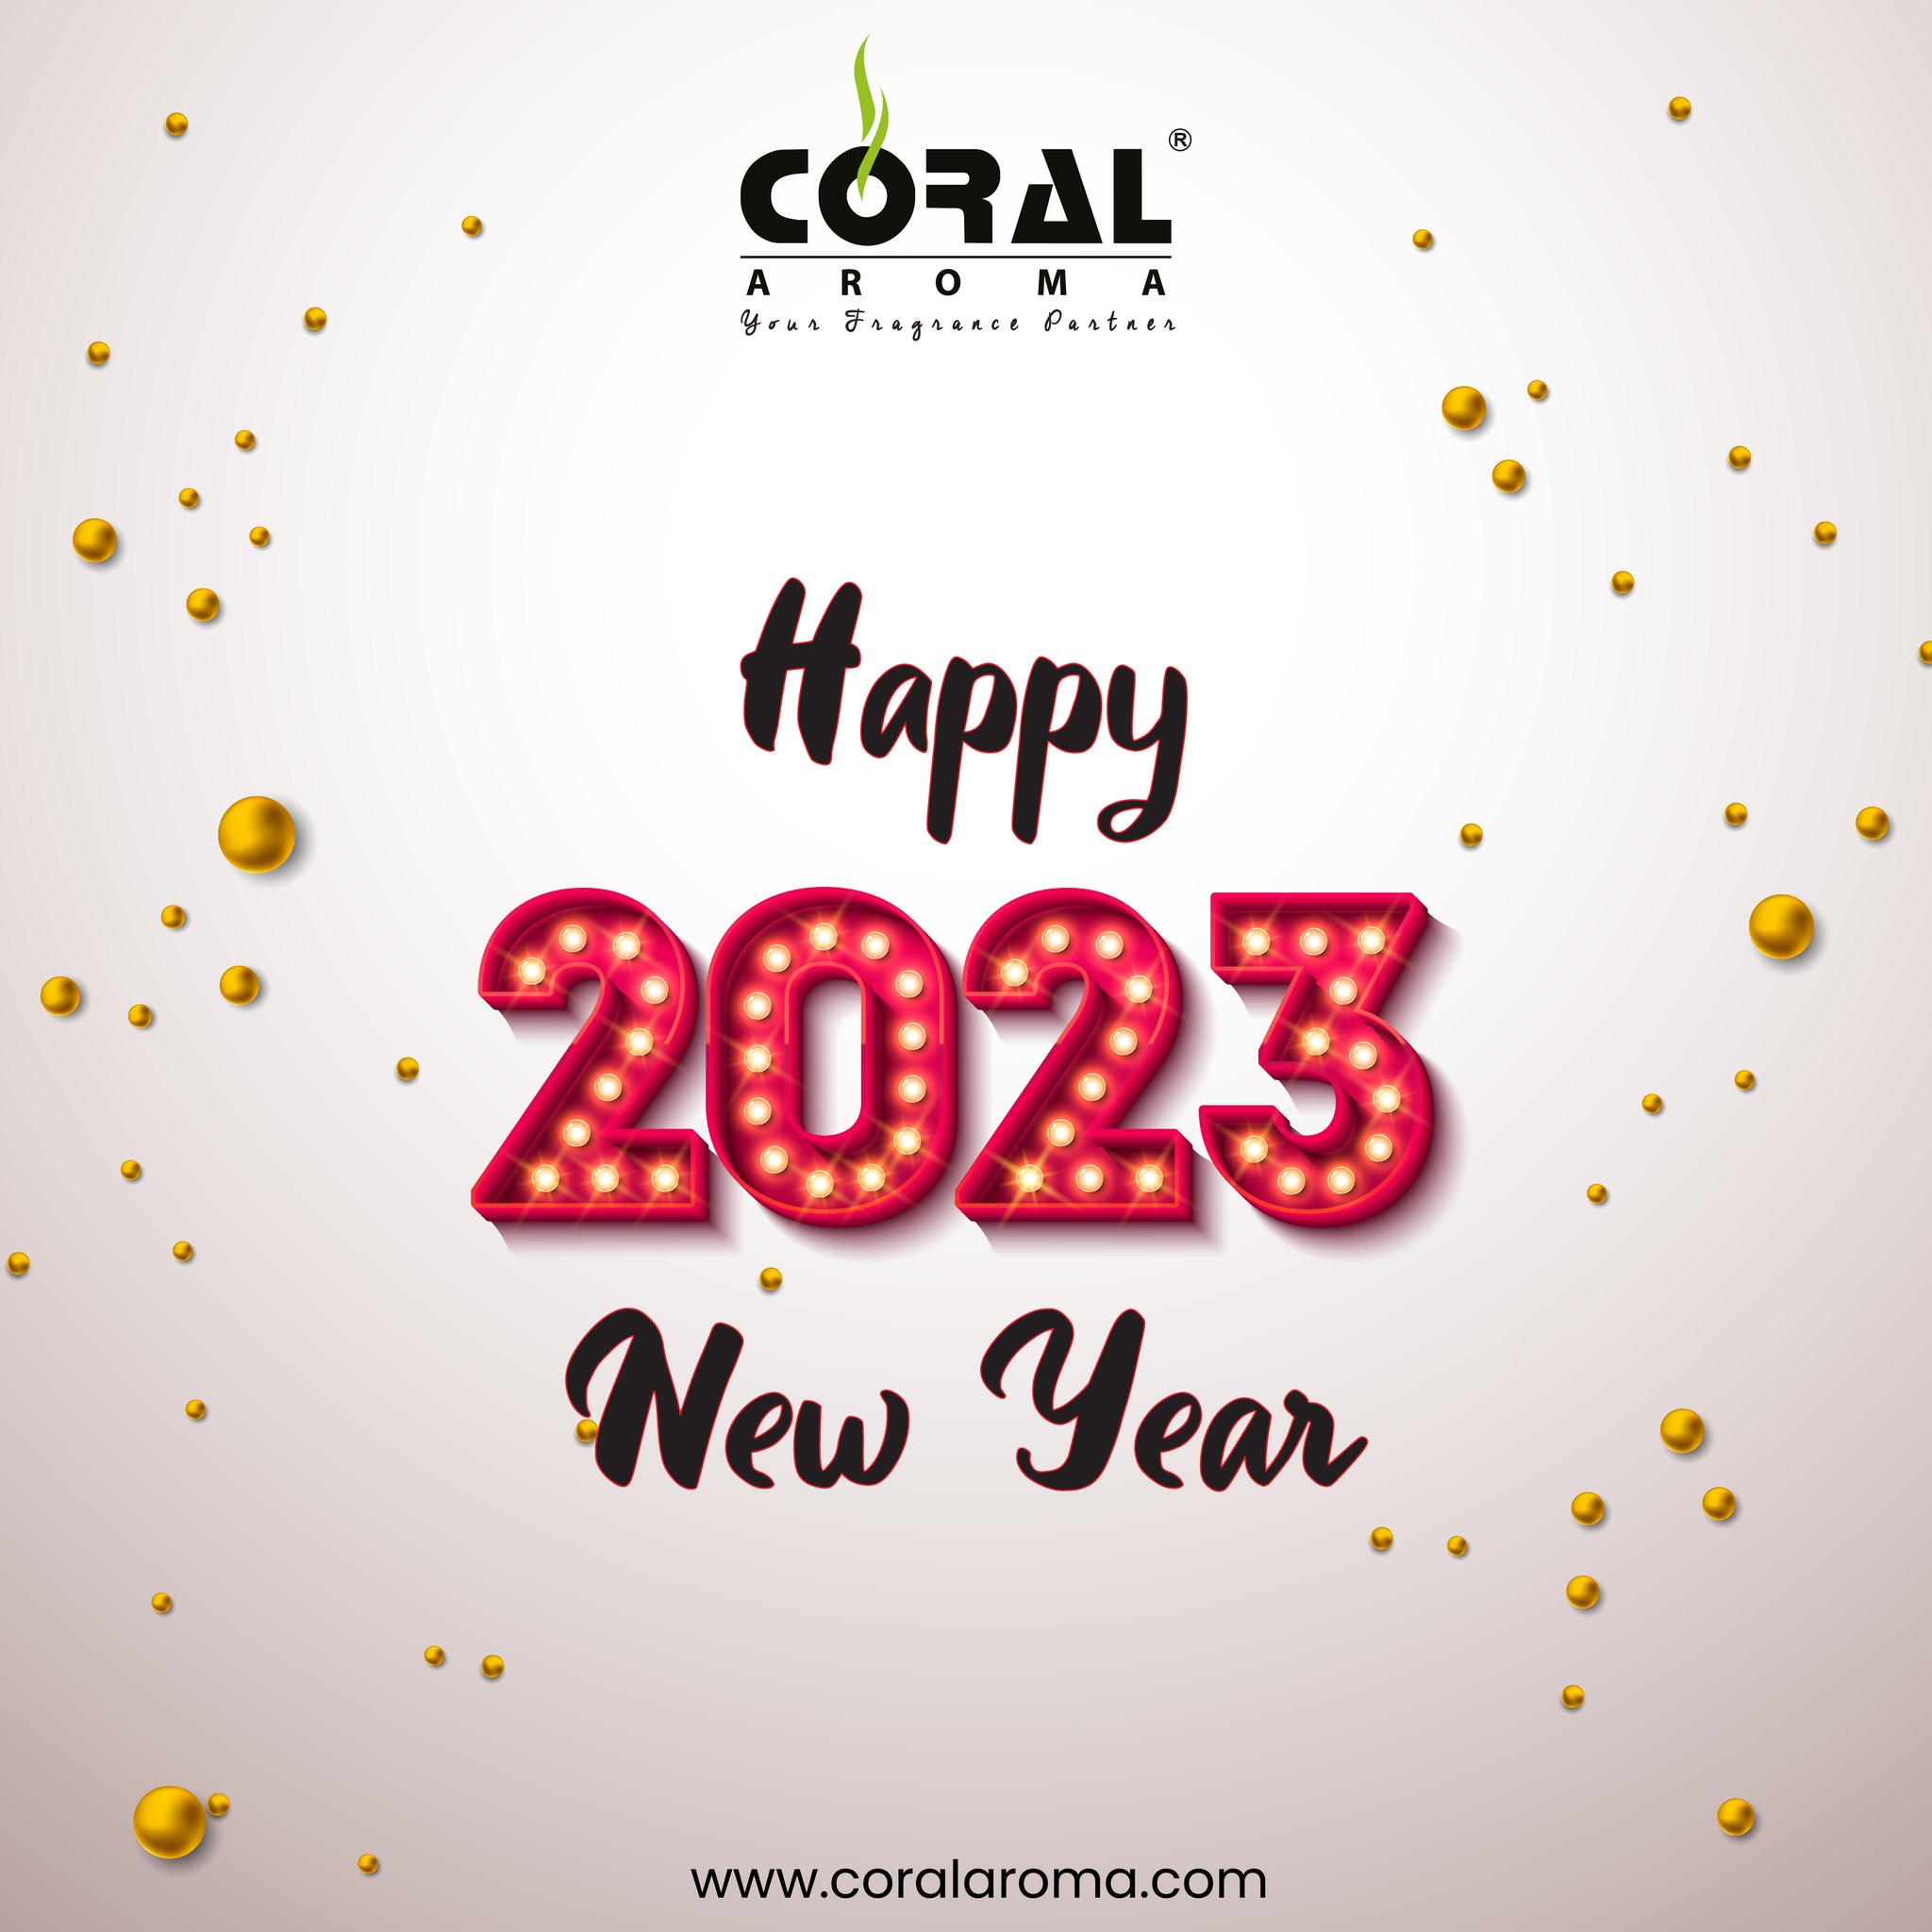 Wishing Everyone a very Happy and Prosperous New Year 2023.

#HappyNewYear #newyear2023